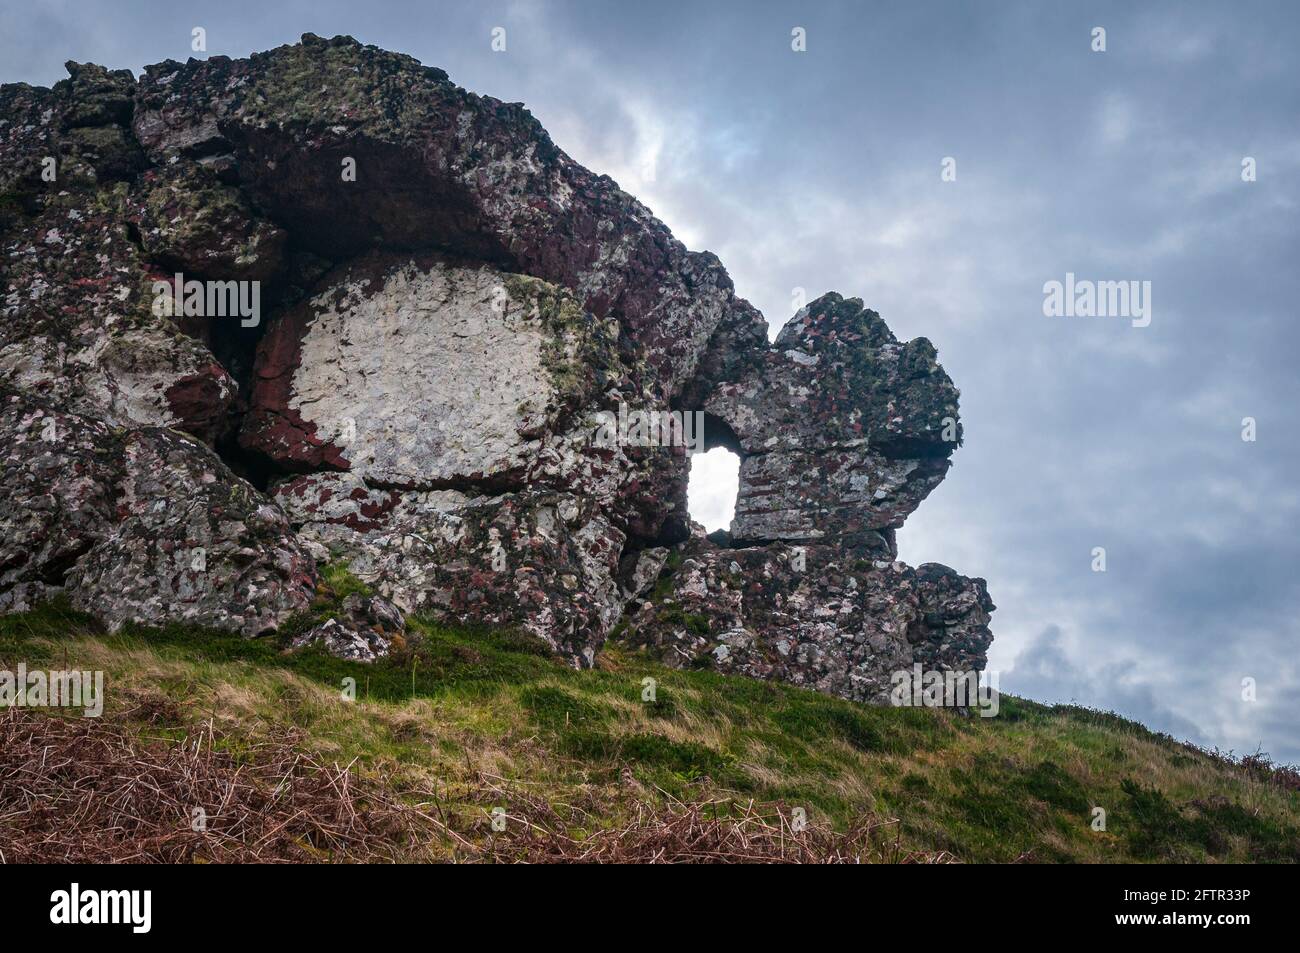 A summer, 3 shot, HDR of a rock formation near Rua Reidh, Rubha reidh, Lighthouse, Melvaig, Gairloch, Wester Ross, Scotland. 23 May 2014 Stock Photo